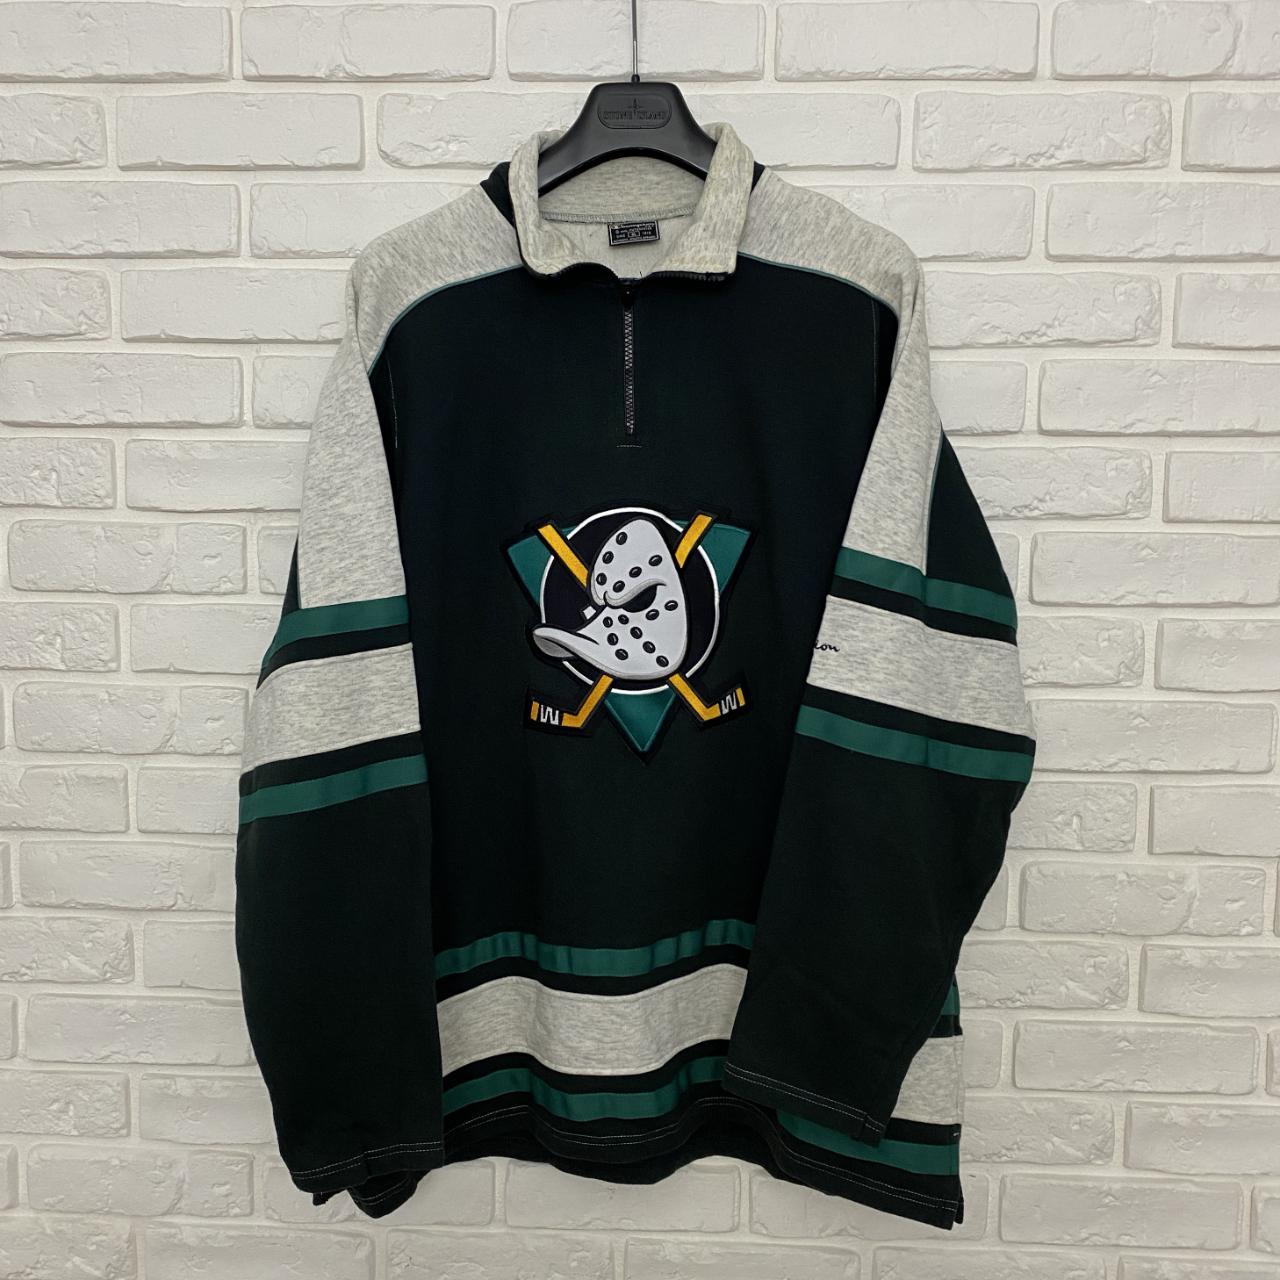 Vintage Mighty Ducks Sweatshirt Size Youth Medium 1990s 